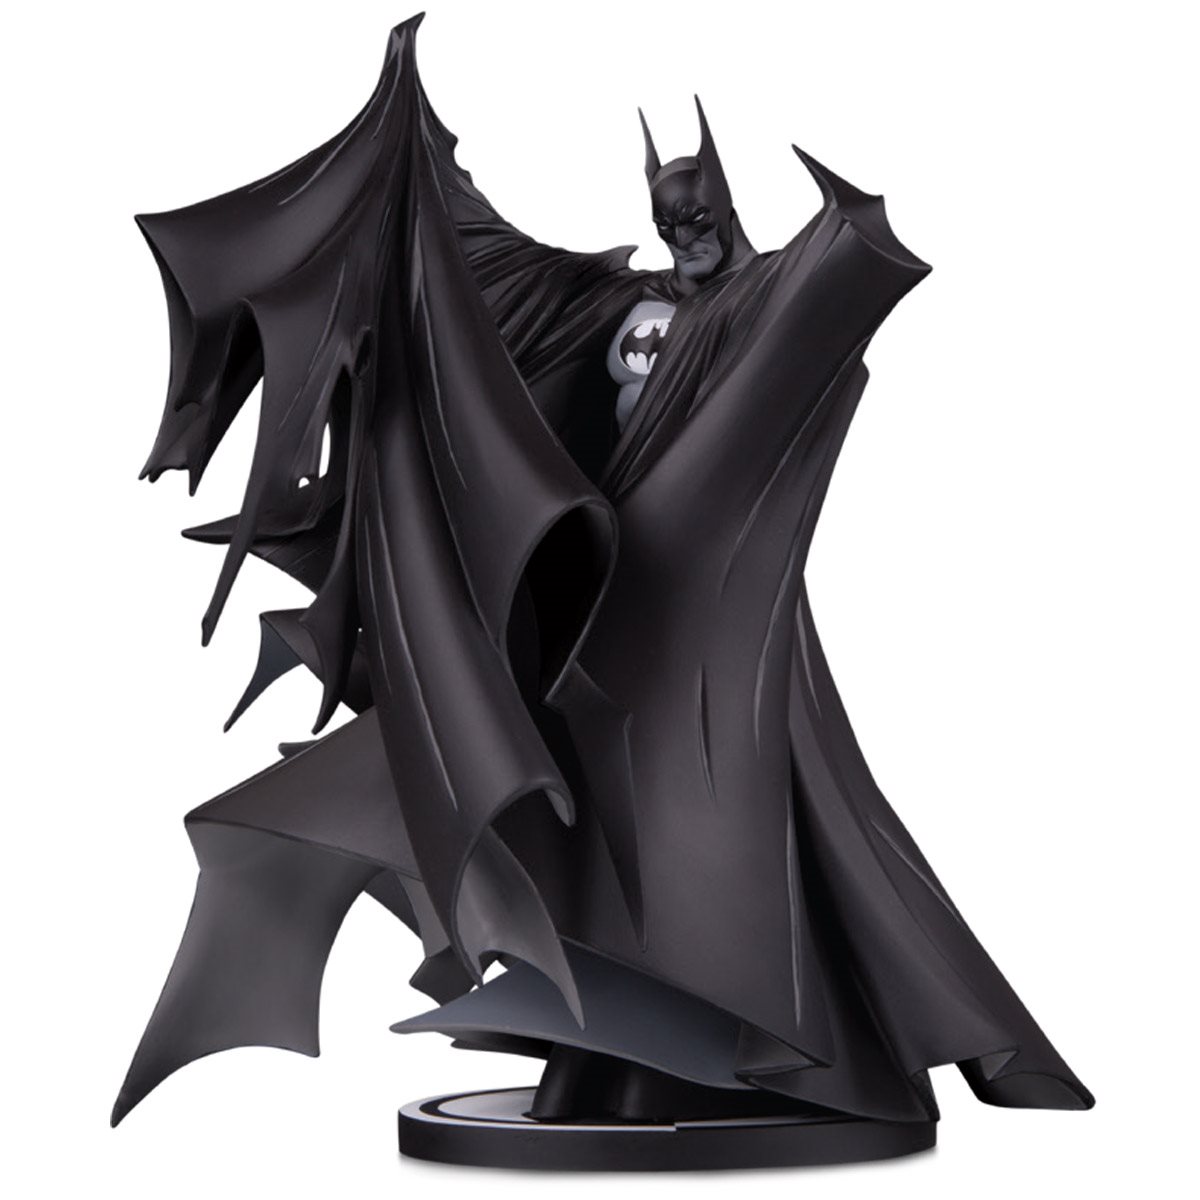 batman black and white action figure